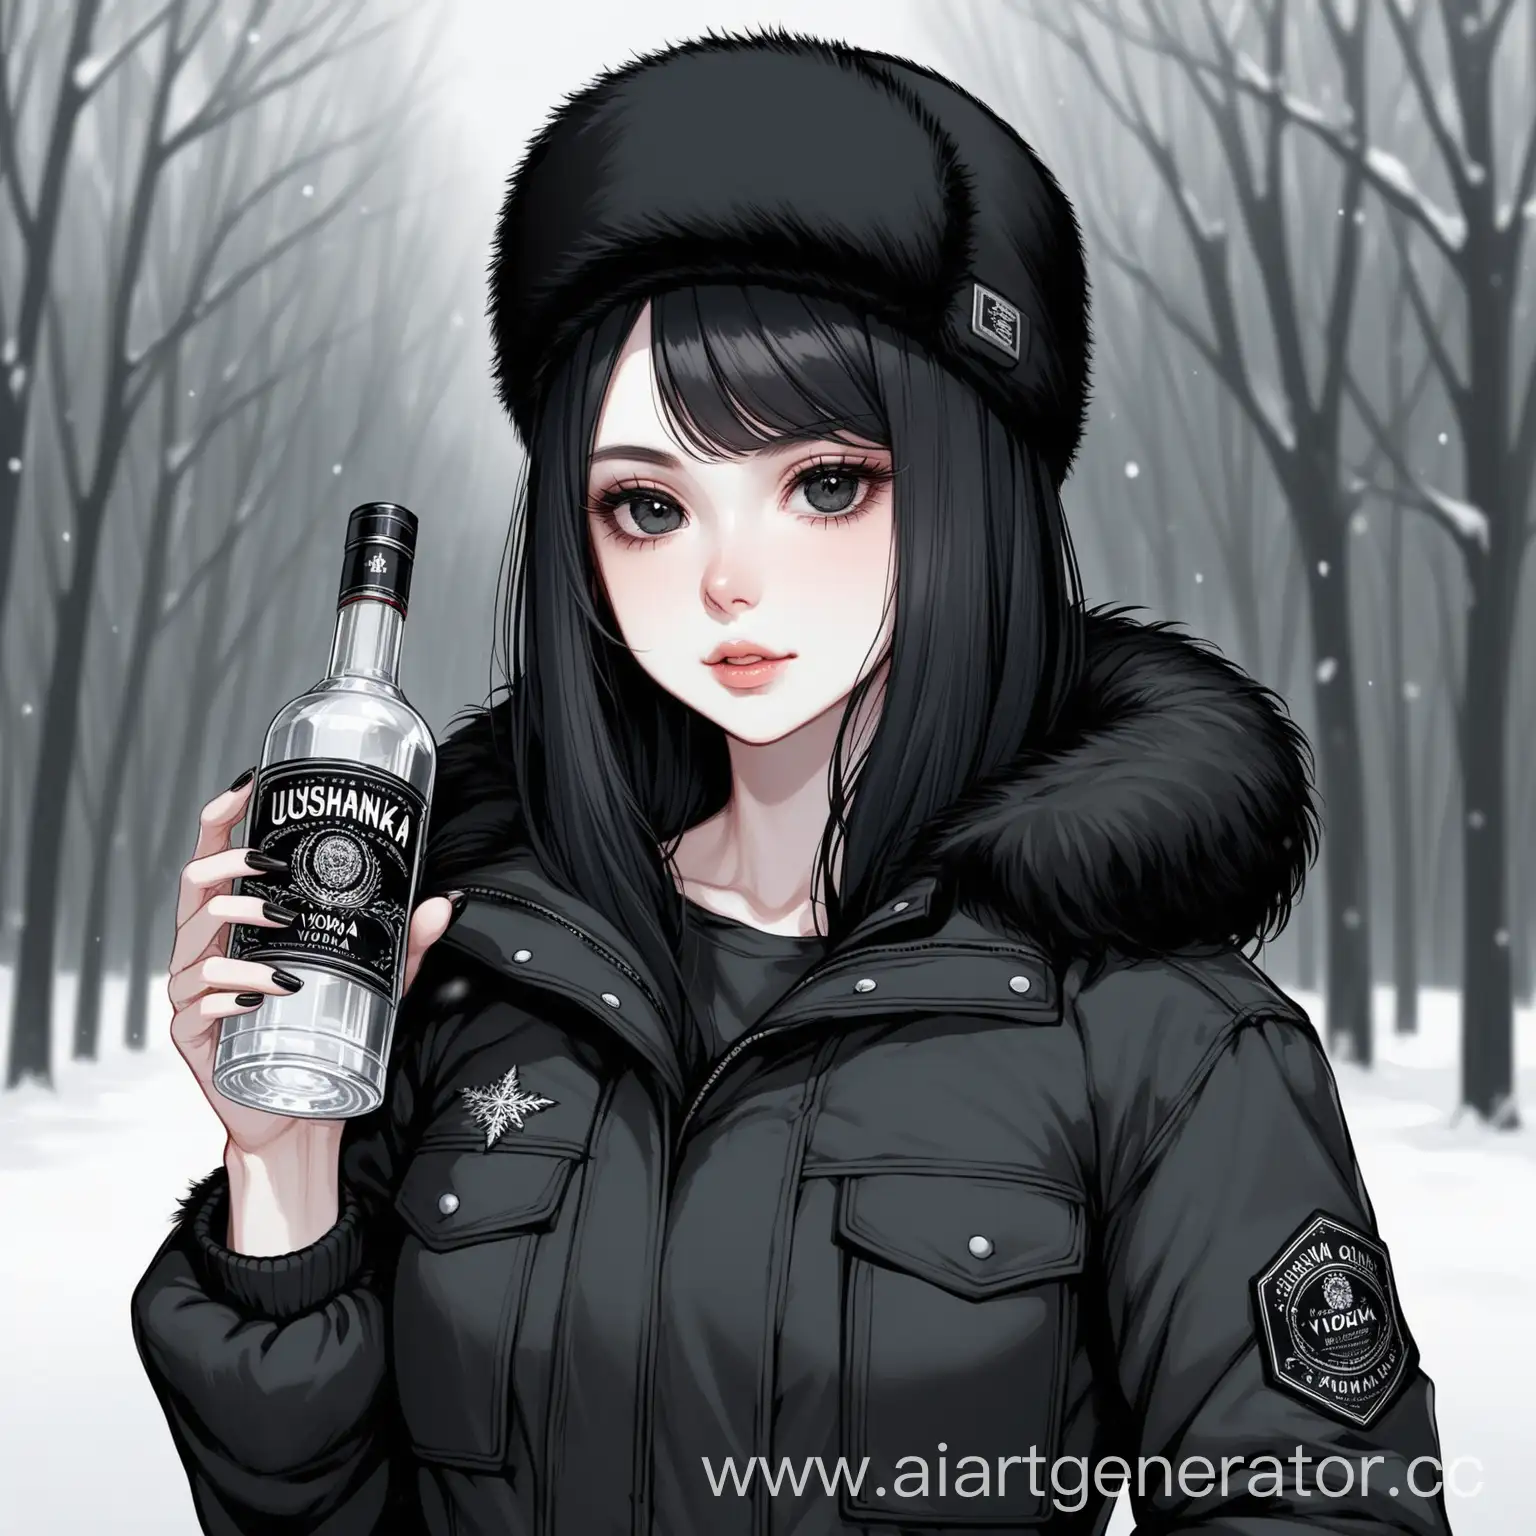 pale skin, shoulder-length black hair, black eyes, she is wearing a black winter jacket, an ushanka on her head, she holds a bottle of vodka in her hand.